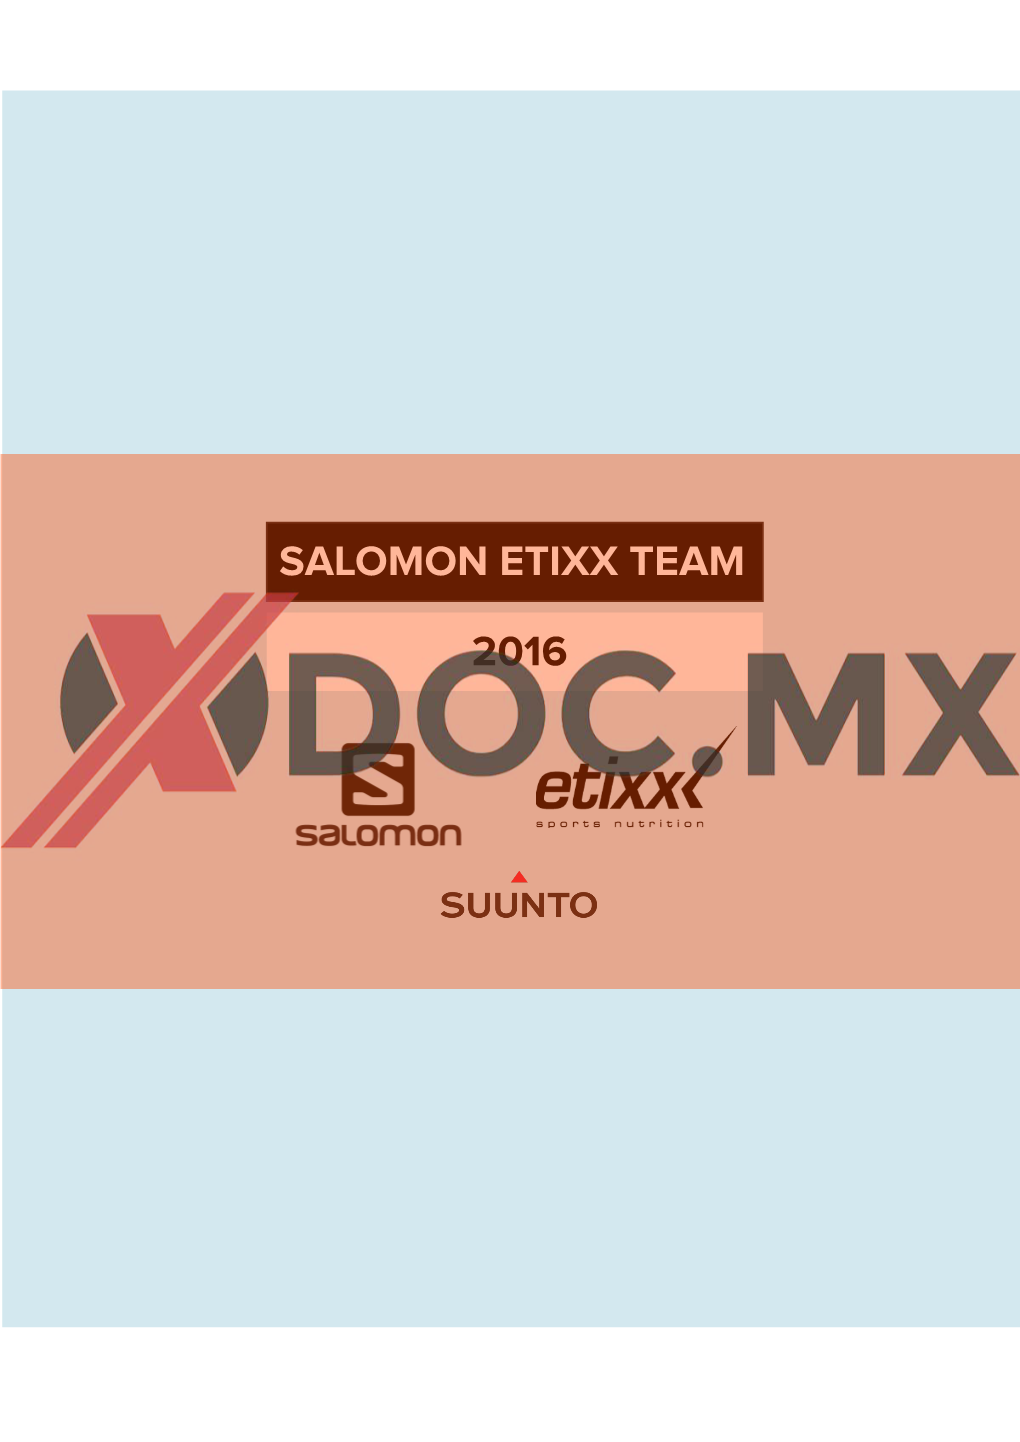 Salomon Etixx Team 2016